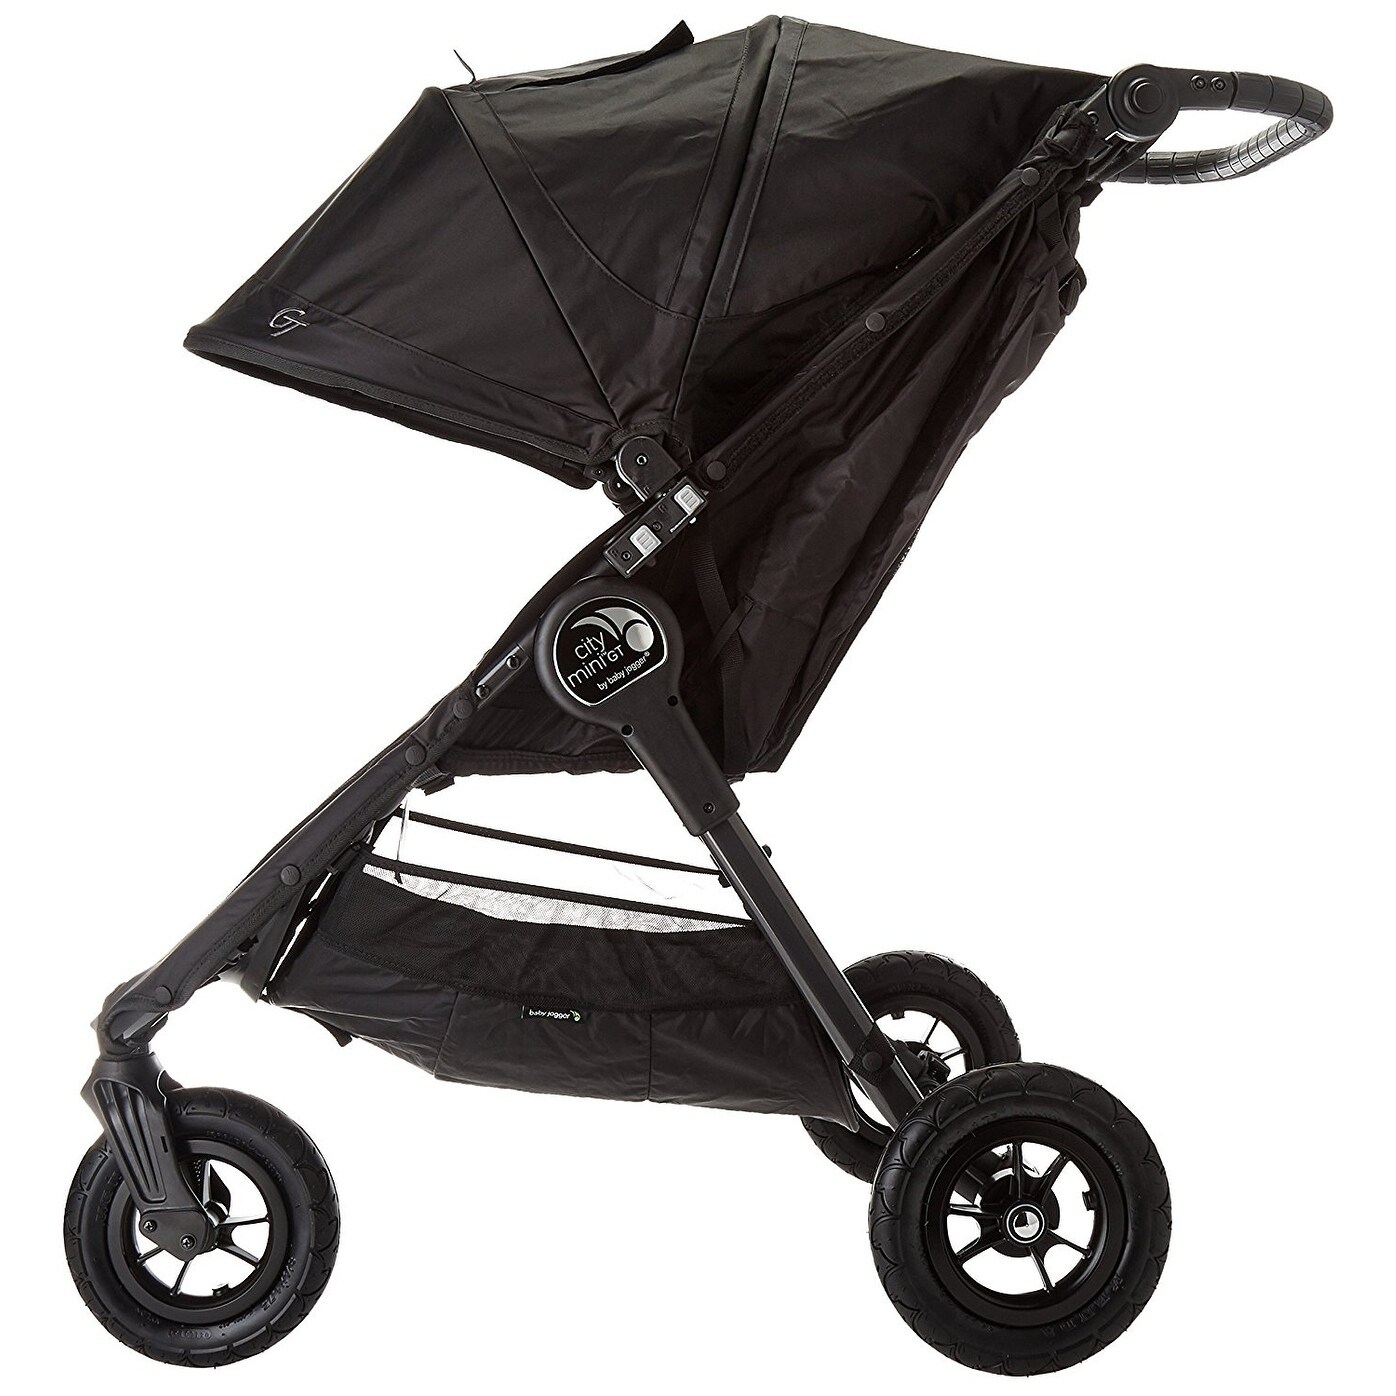 baby jogger city mini gt single stroller black